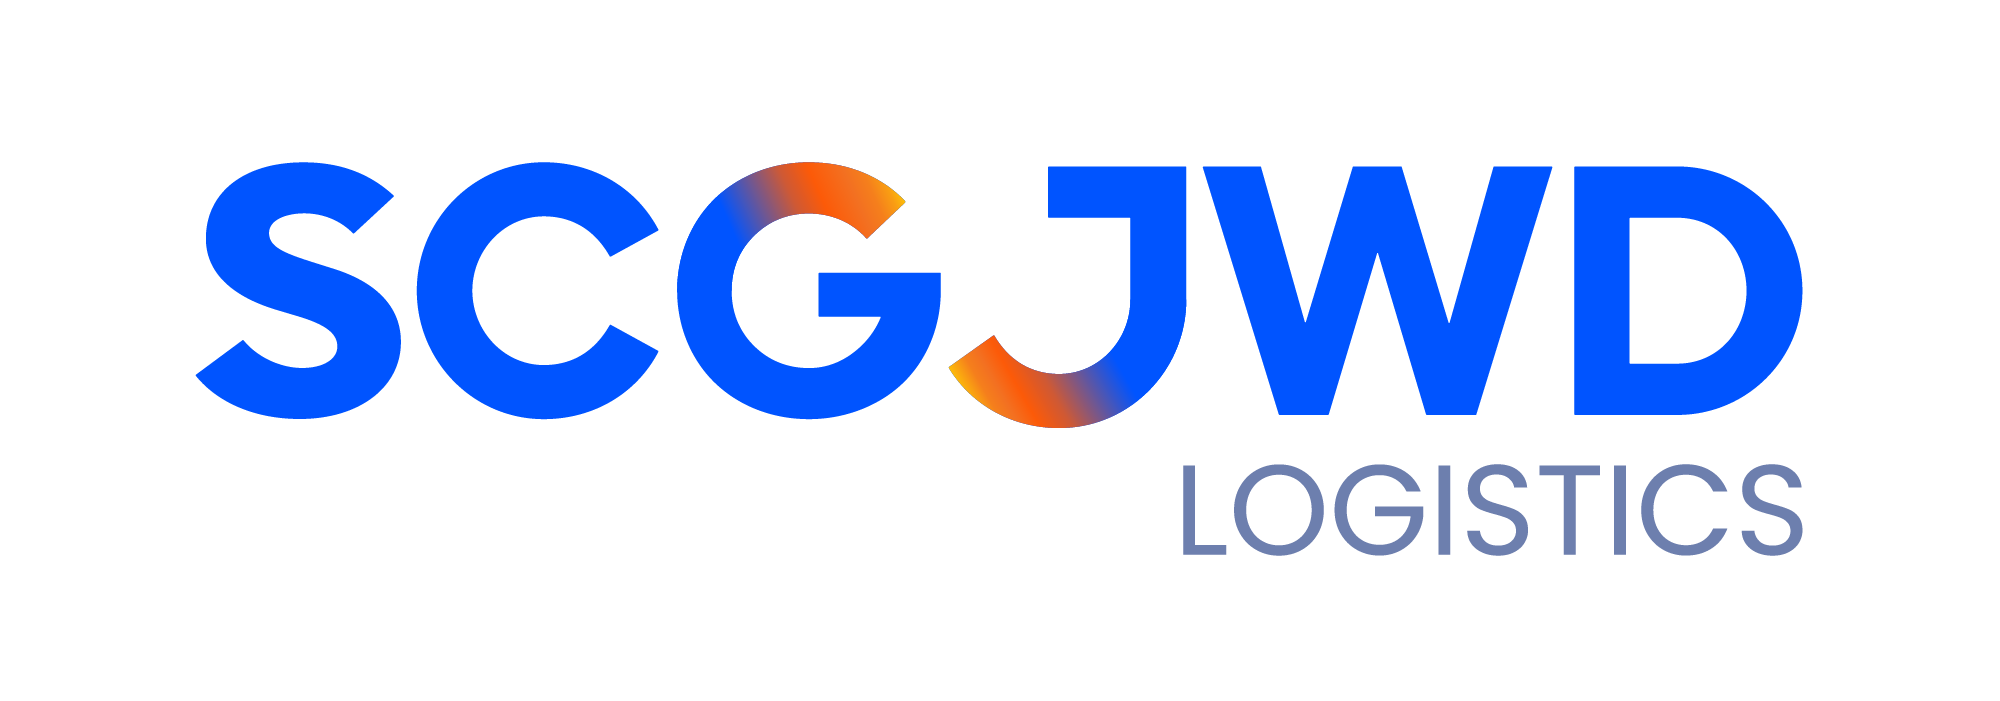 https://www.jobtopgun.com/content/filejobtopgun/logo_com_job/j5392.gif